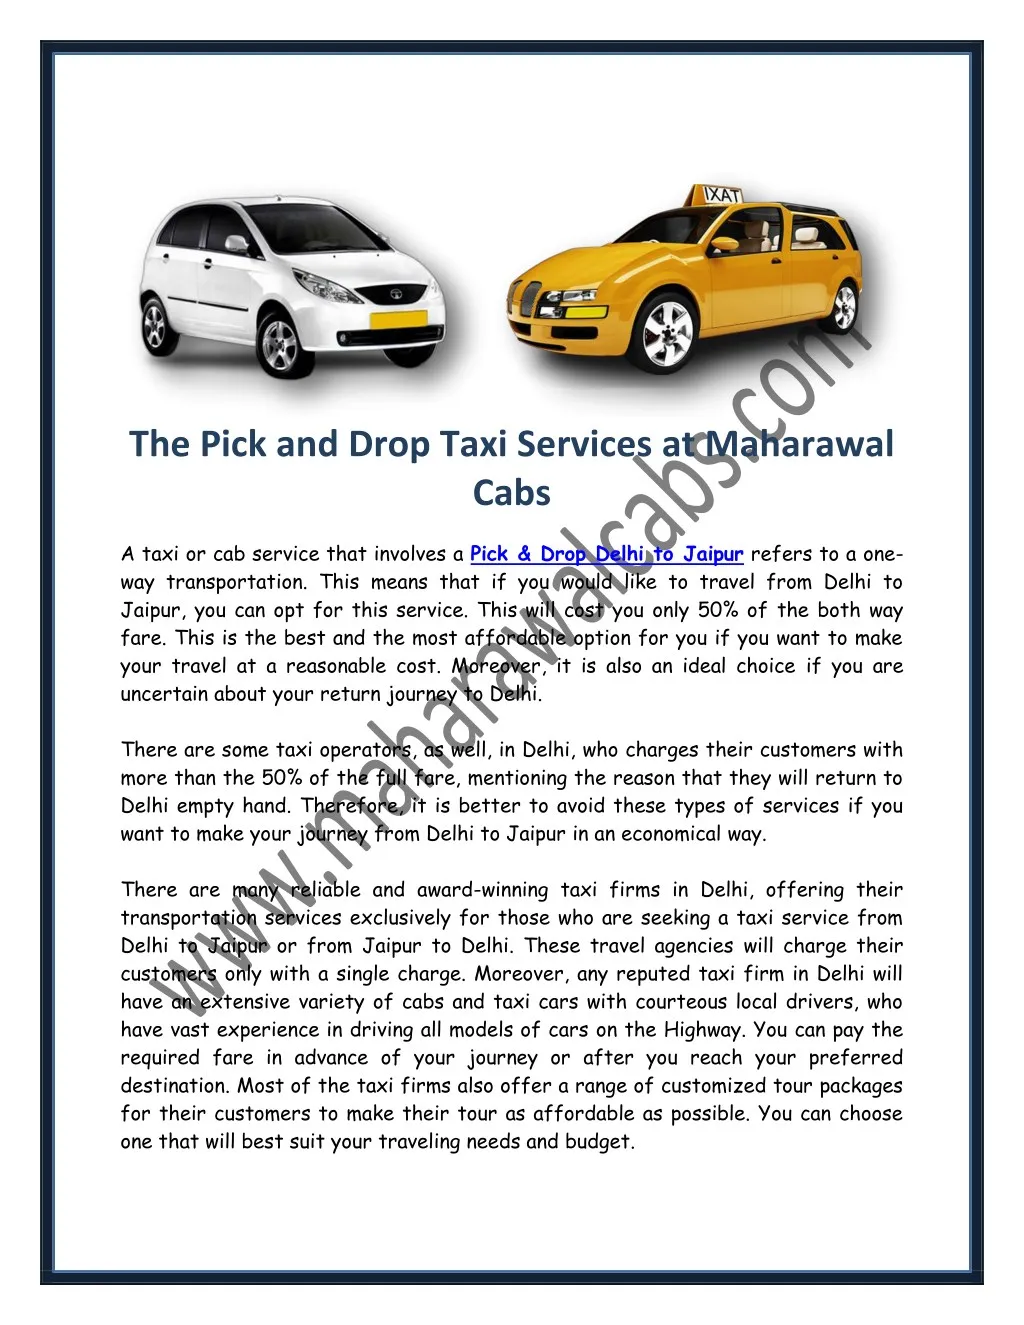 the pick and drop taxi services at maharawal cabs